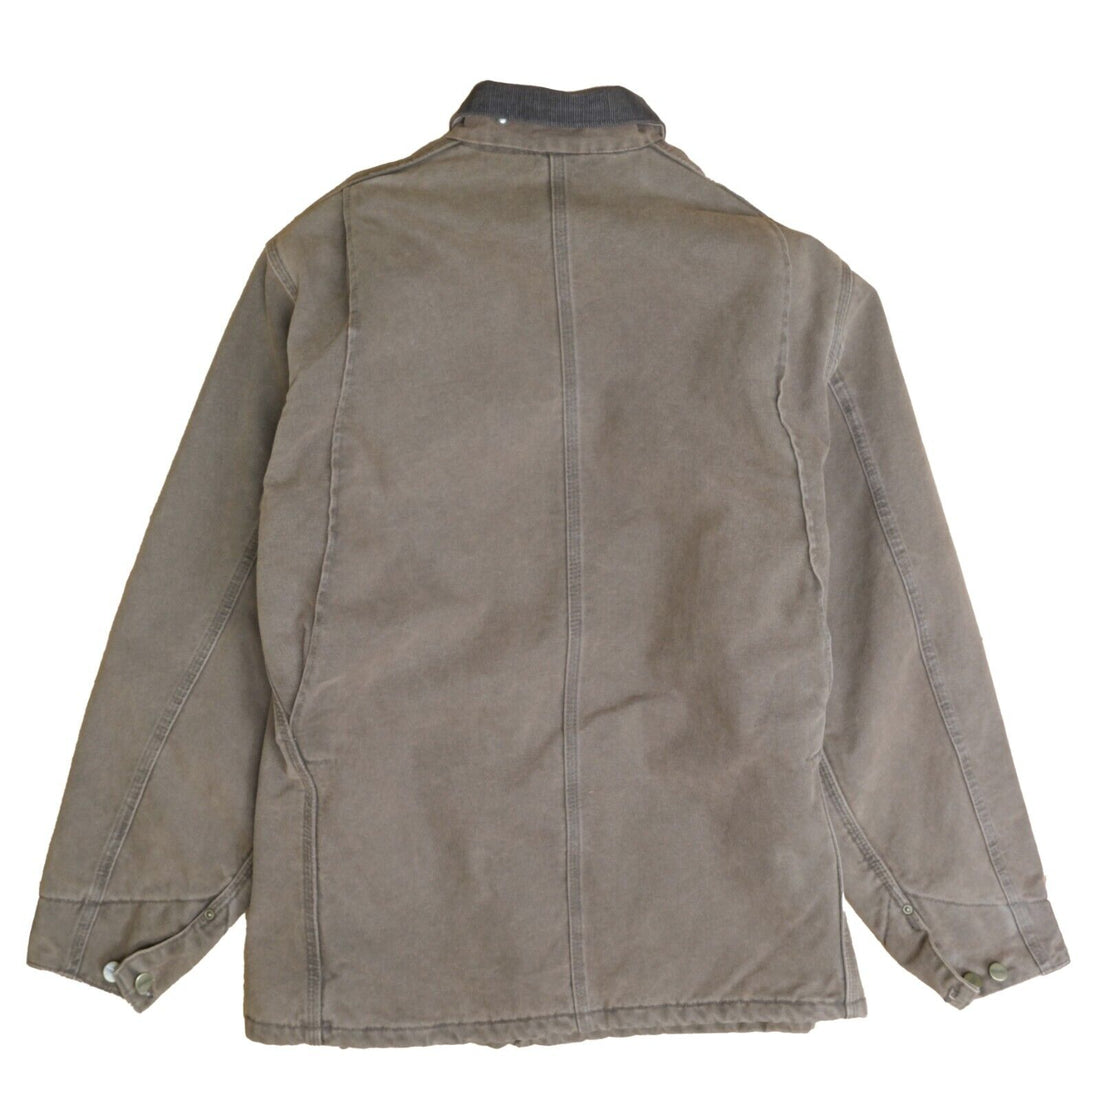 Vintage Carhartt Canvas Chore Jacket Size Large Brown Blanket Lined C02